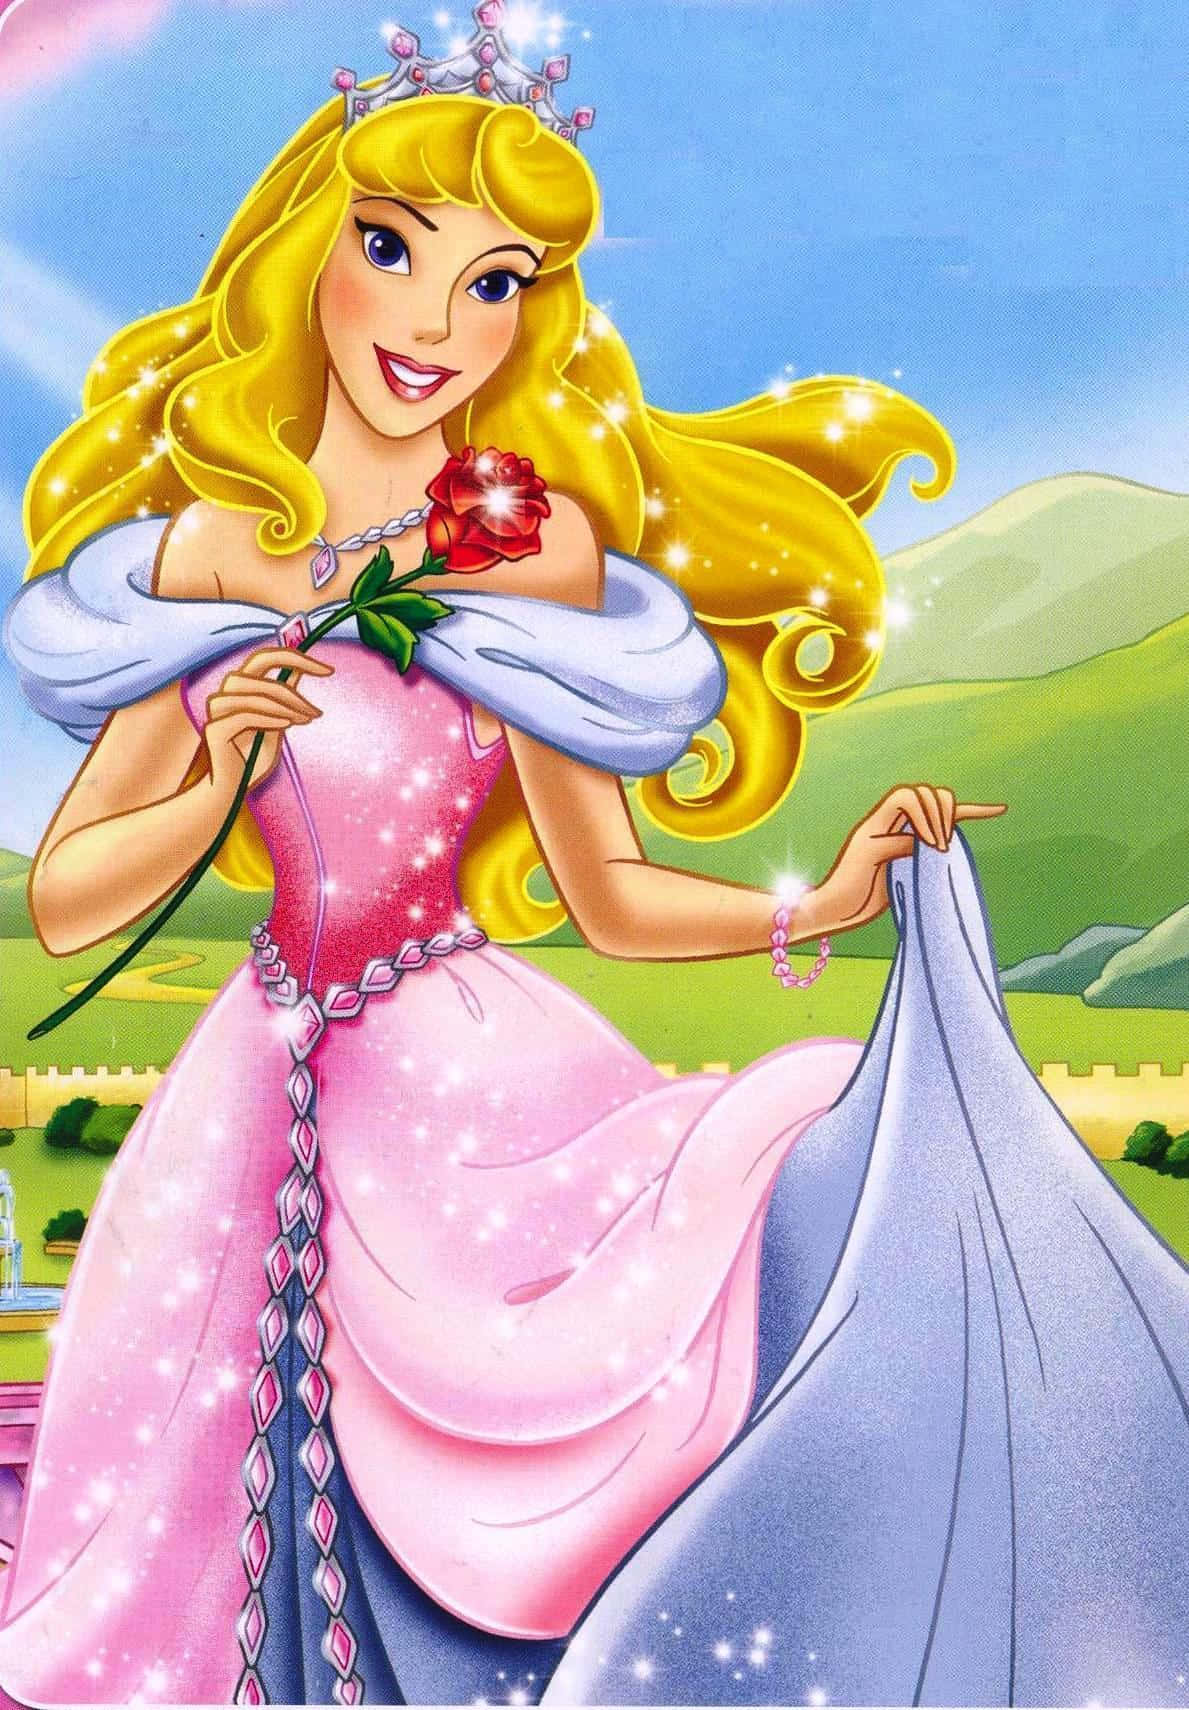 Prinsessebilleder pynte baggrunden.